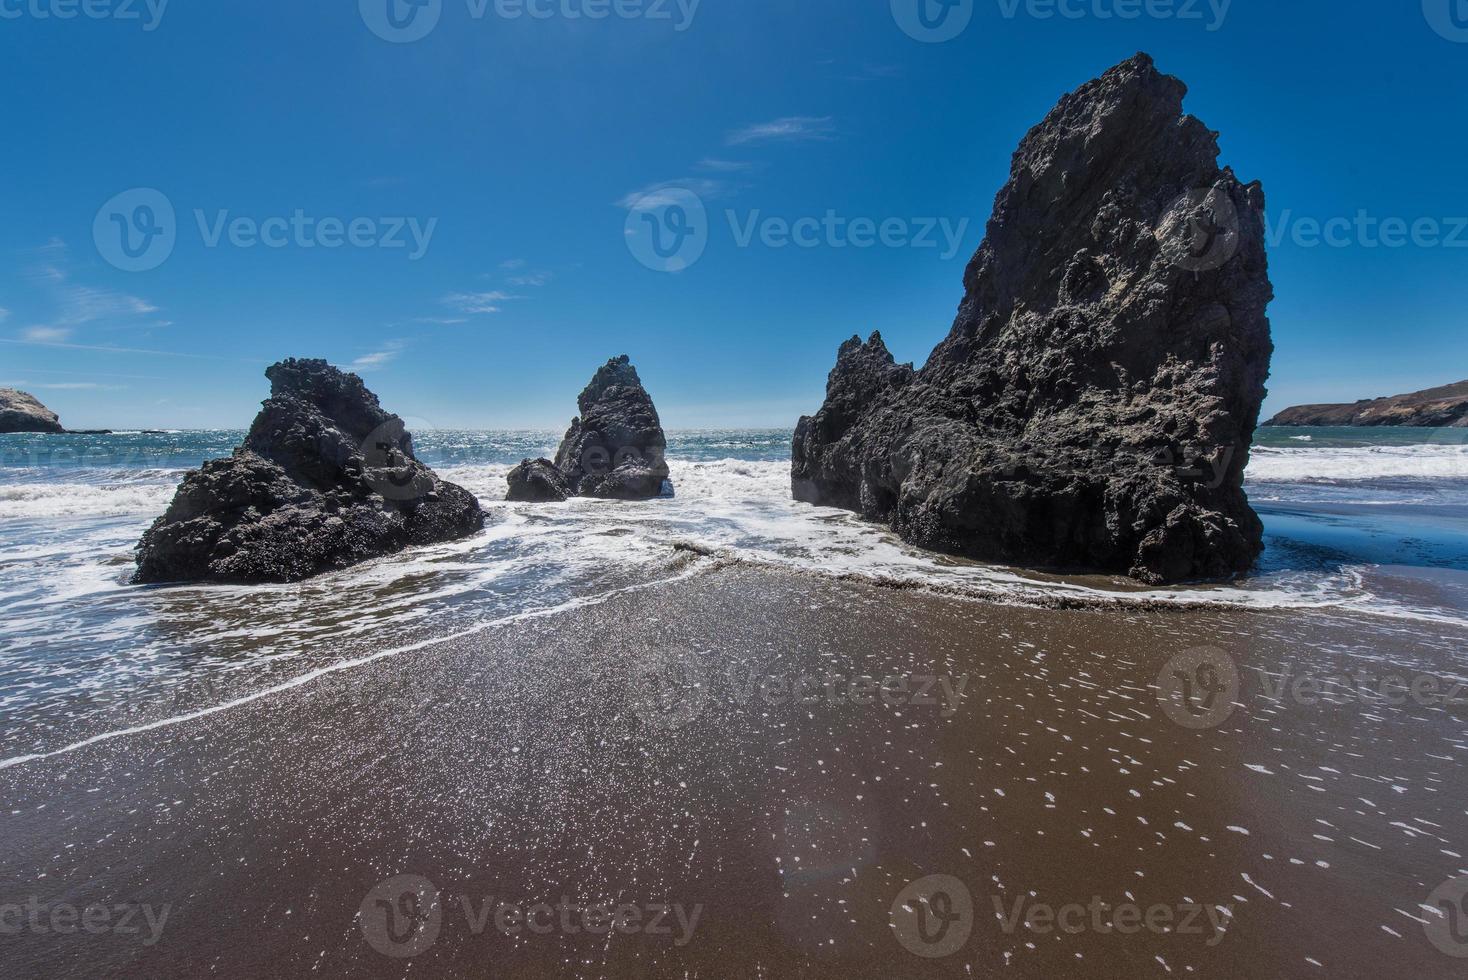 rodeo beach california rocce onde e sabbia foto